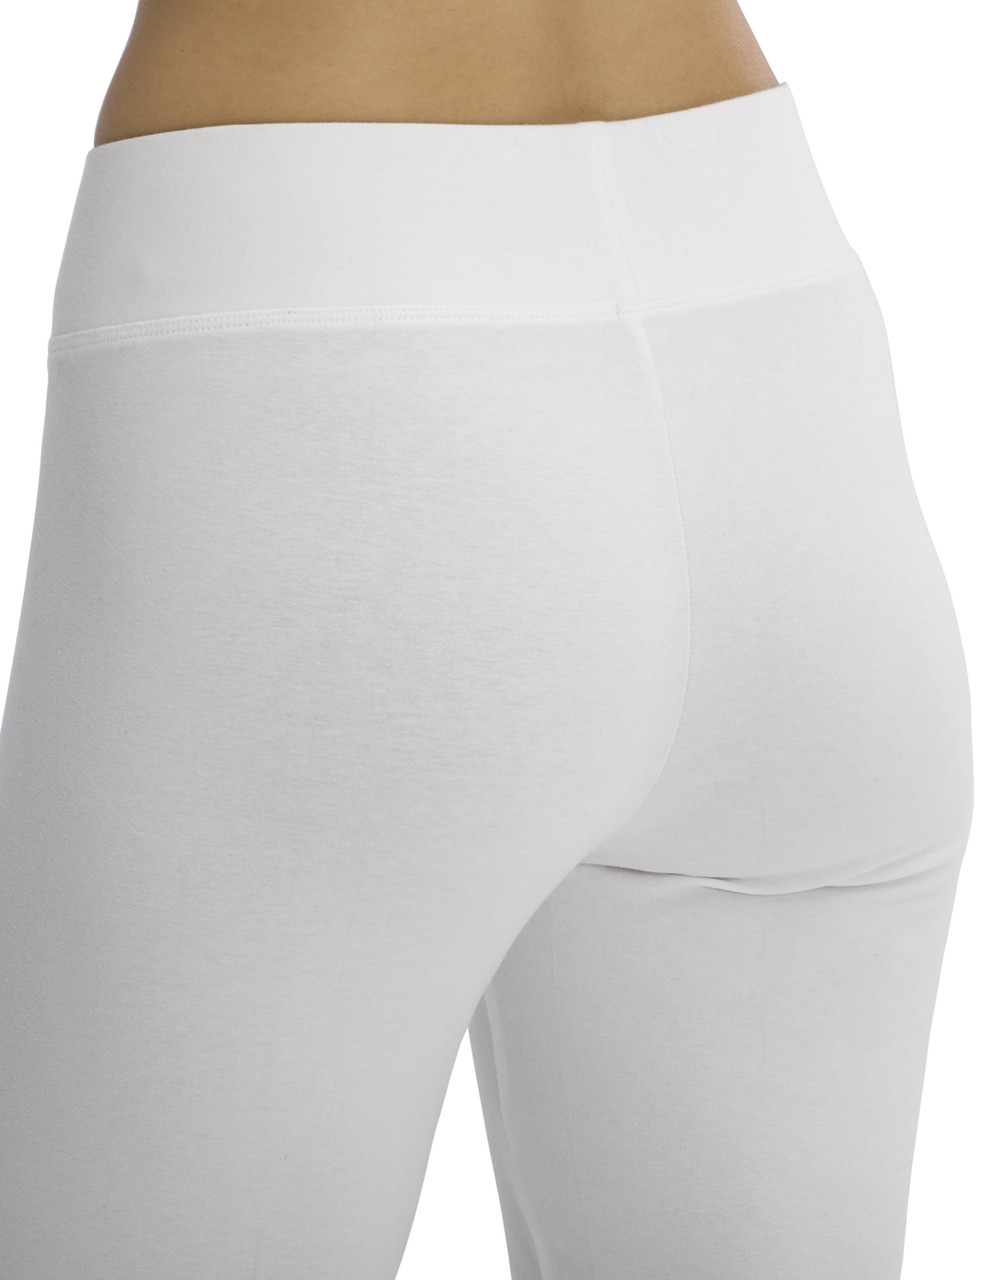 ESMARA Super Soft Woman's White Cotton Capri Leggings Size Large NWT